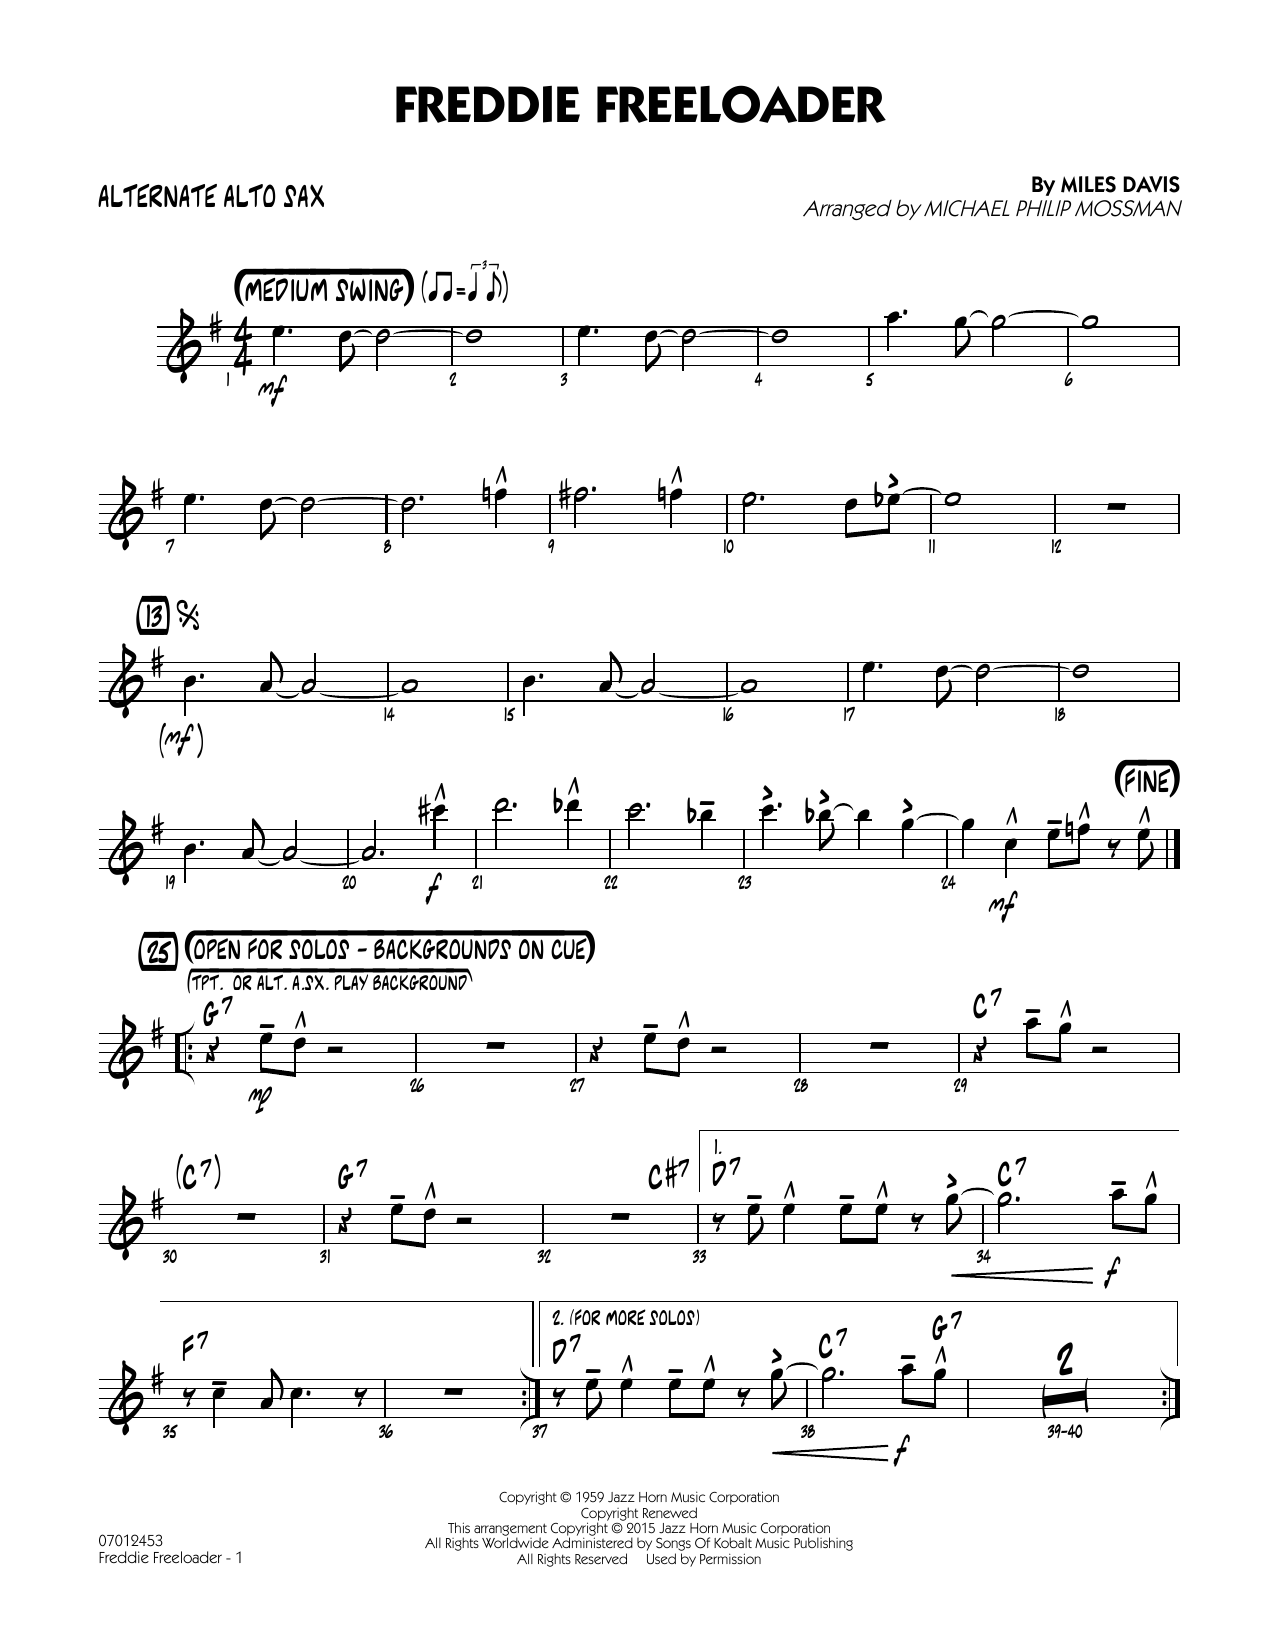 Michael Philip Mossman Freddie Freeloader - Alternate Alto Sax sheet music notes and chords. Download Printable PDF.